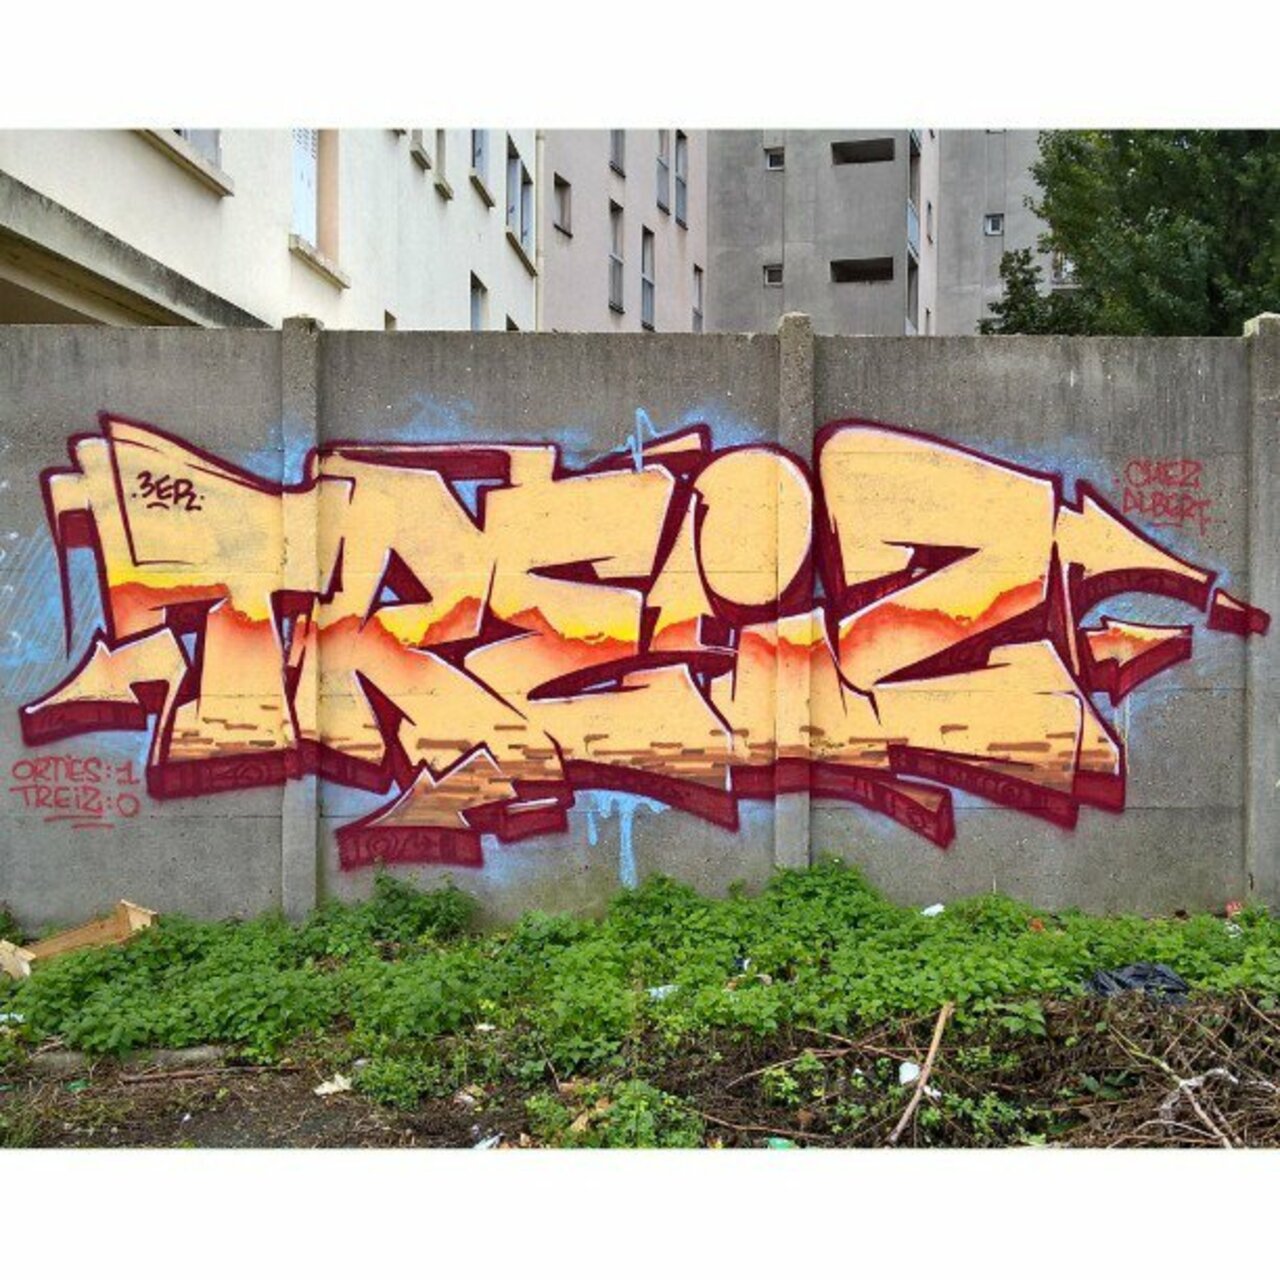 RT @StArtEverywhere: TREIZ
#3ER #streetart #graffiti #graff #art #fatcap #bombing #sprayart #spraycanart #wallart #handstyle #lettering … https://t.co/2fCX7qG1zm